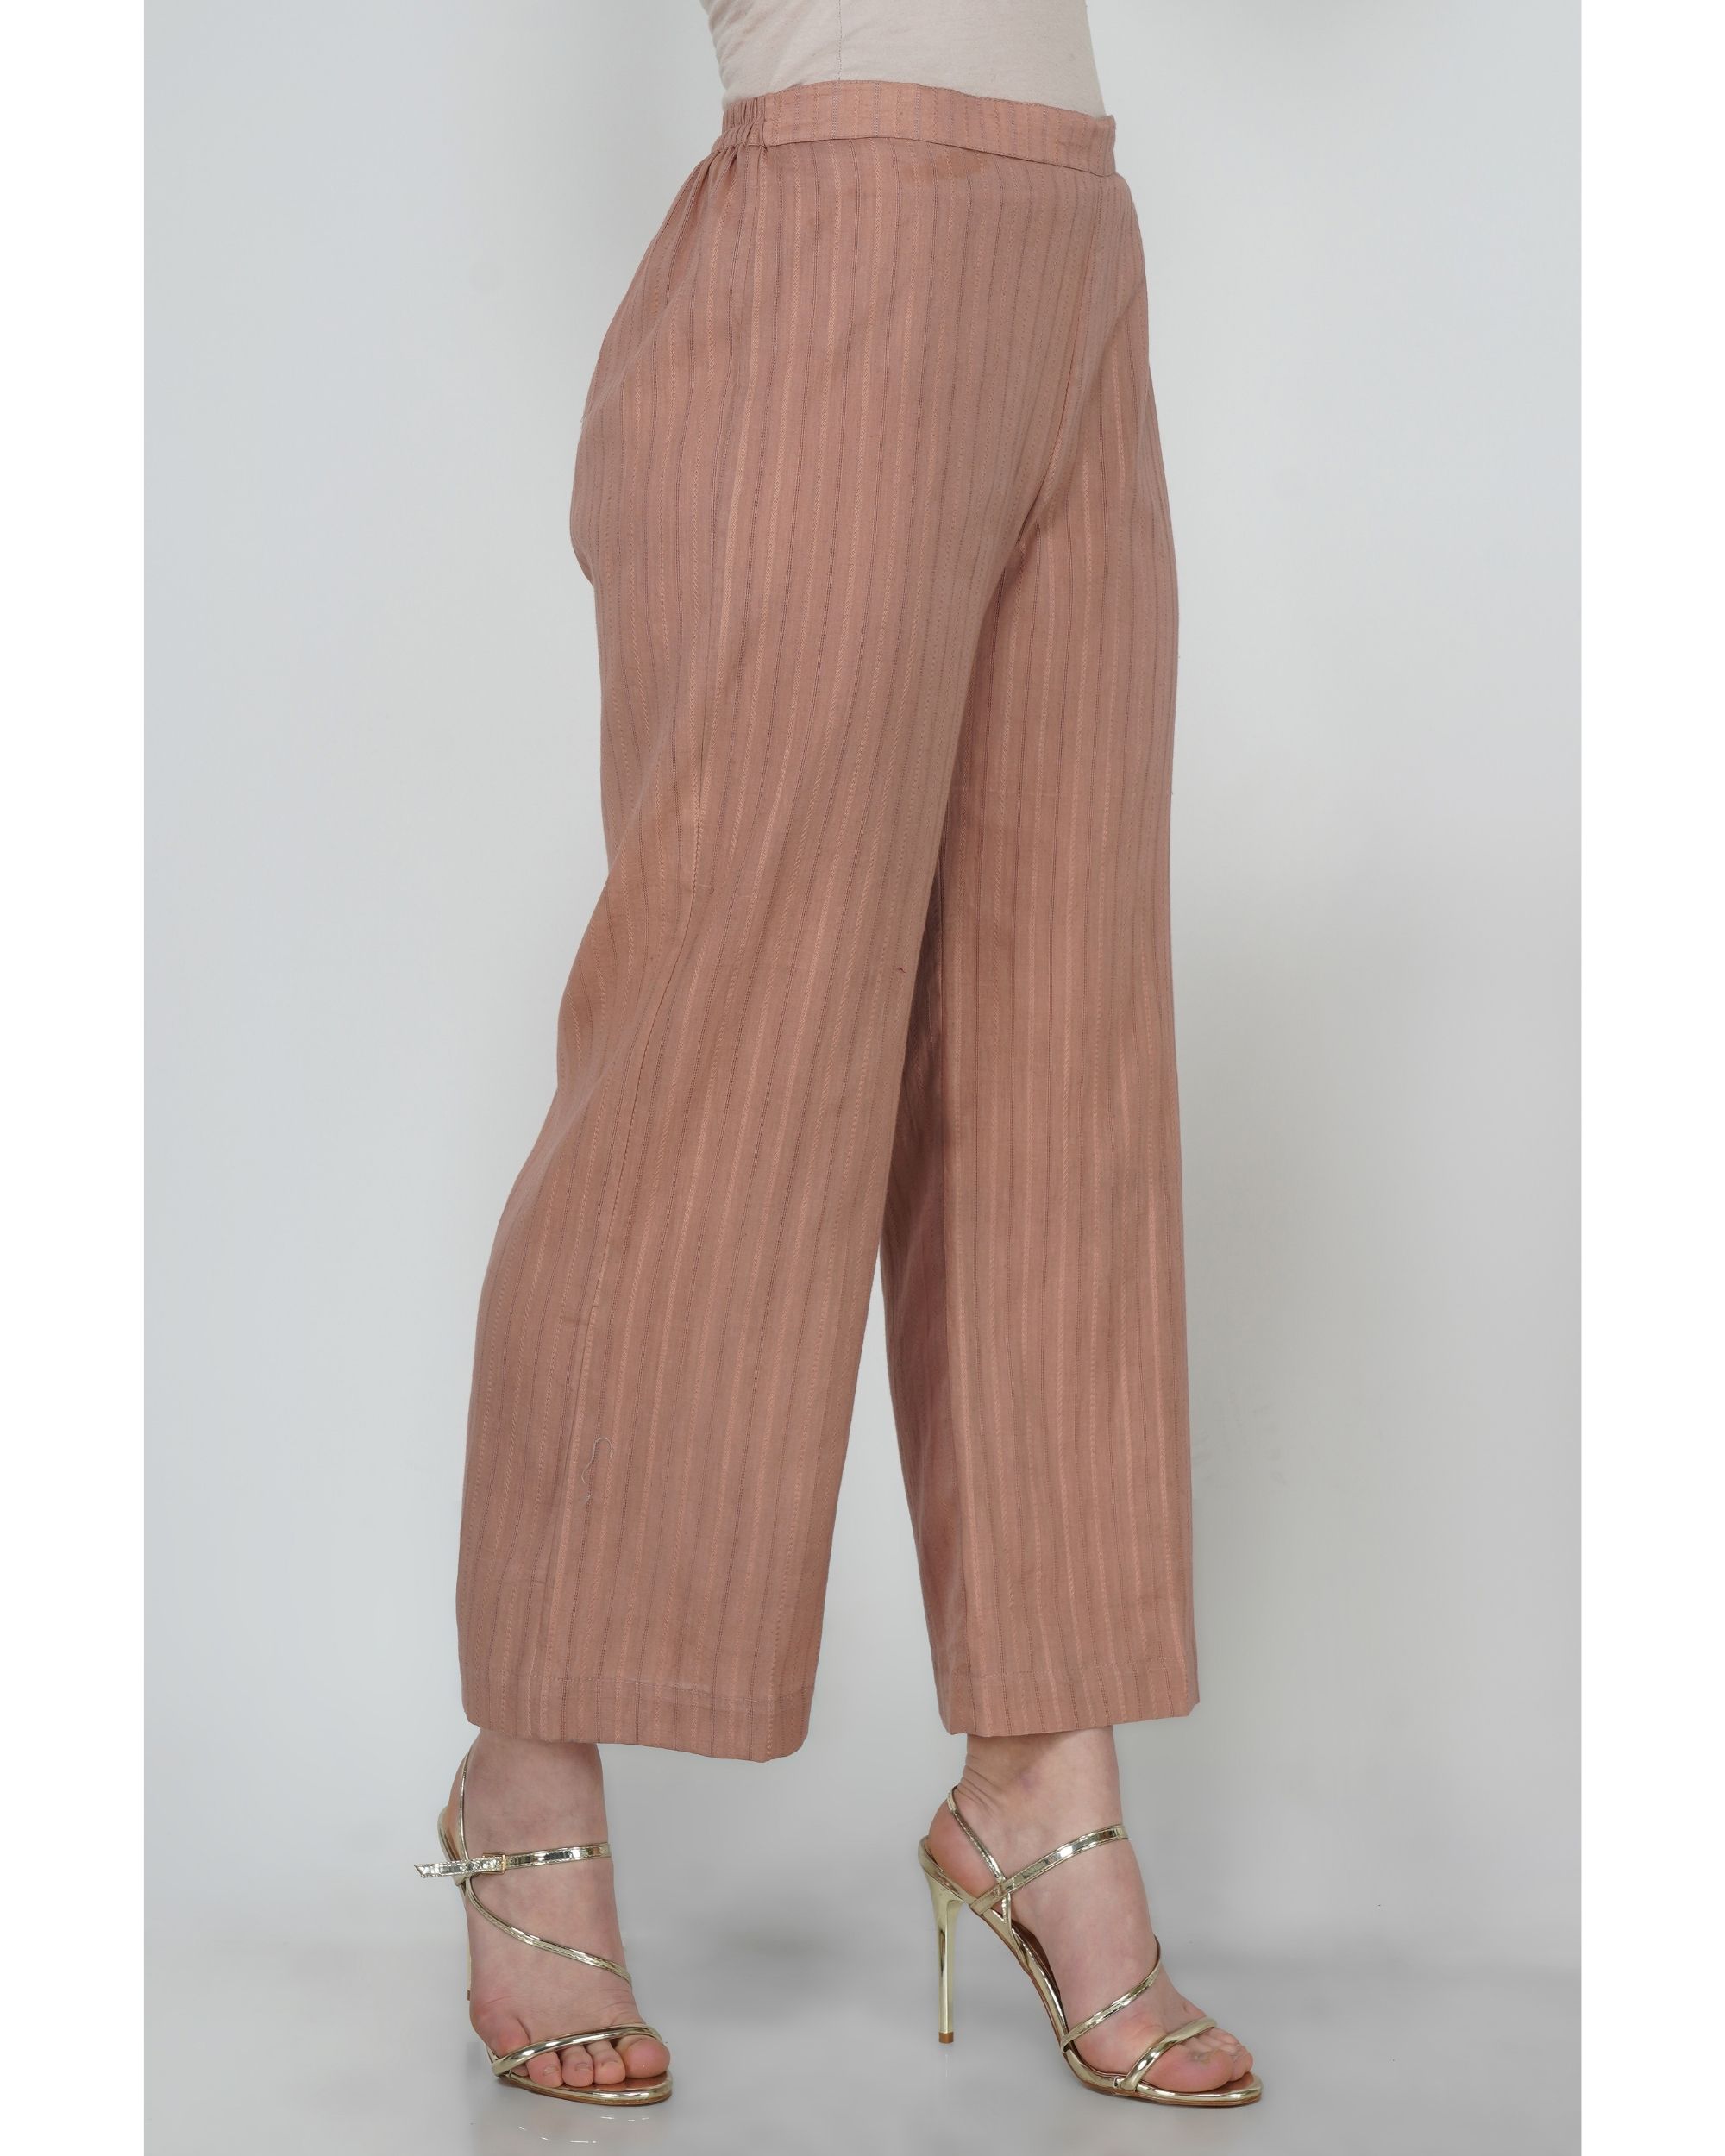 Sepia striped leno cotton pants by Vintage Loom | The Secret Label